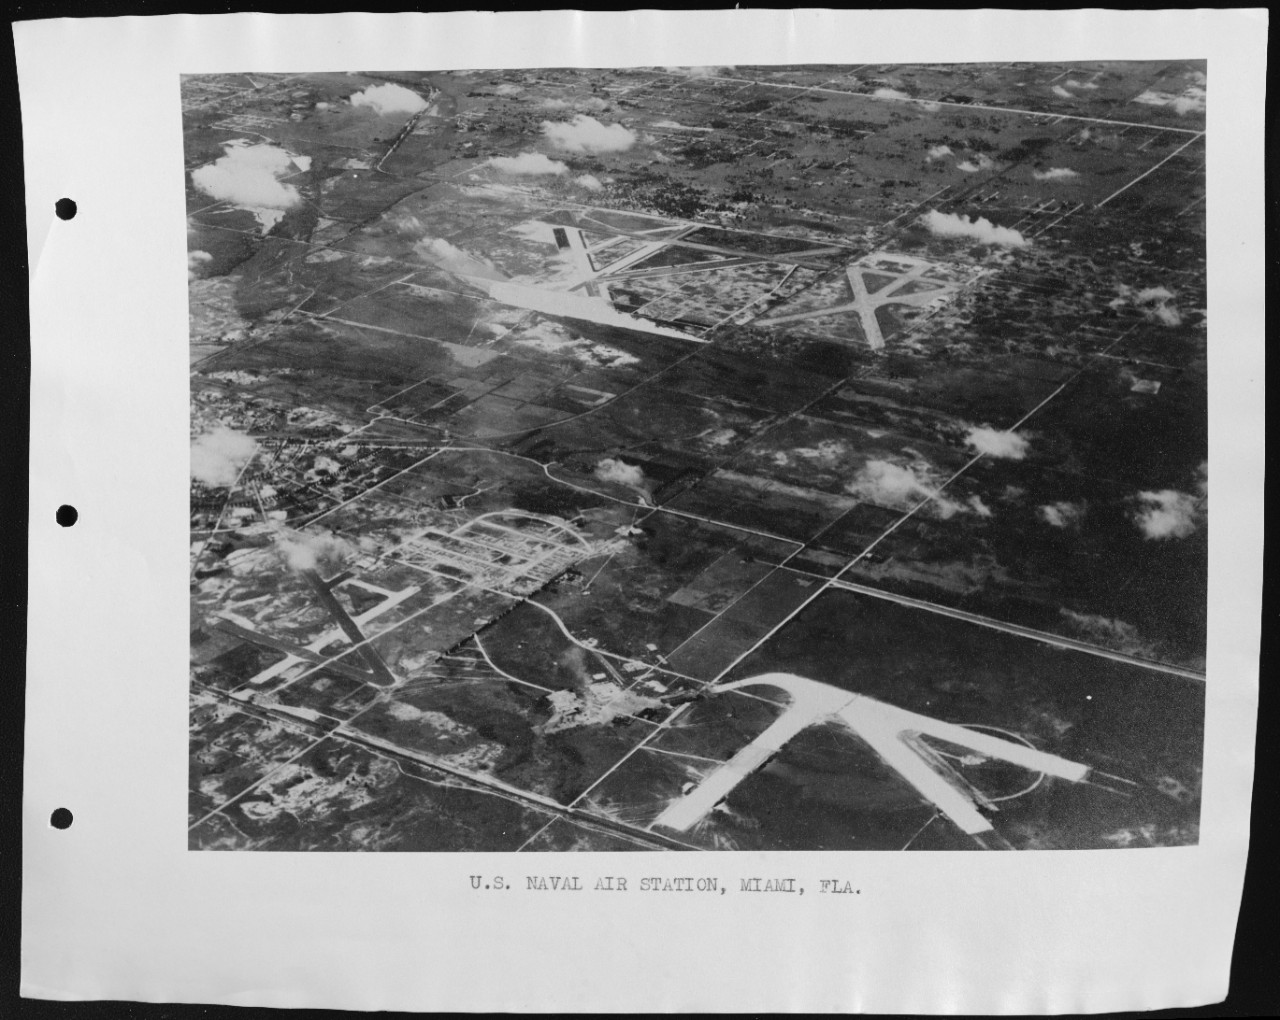 Aerial view of U.S. Naval Air Station, Miami, Florida